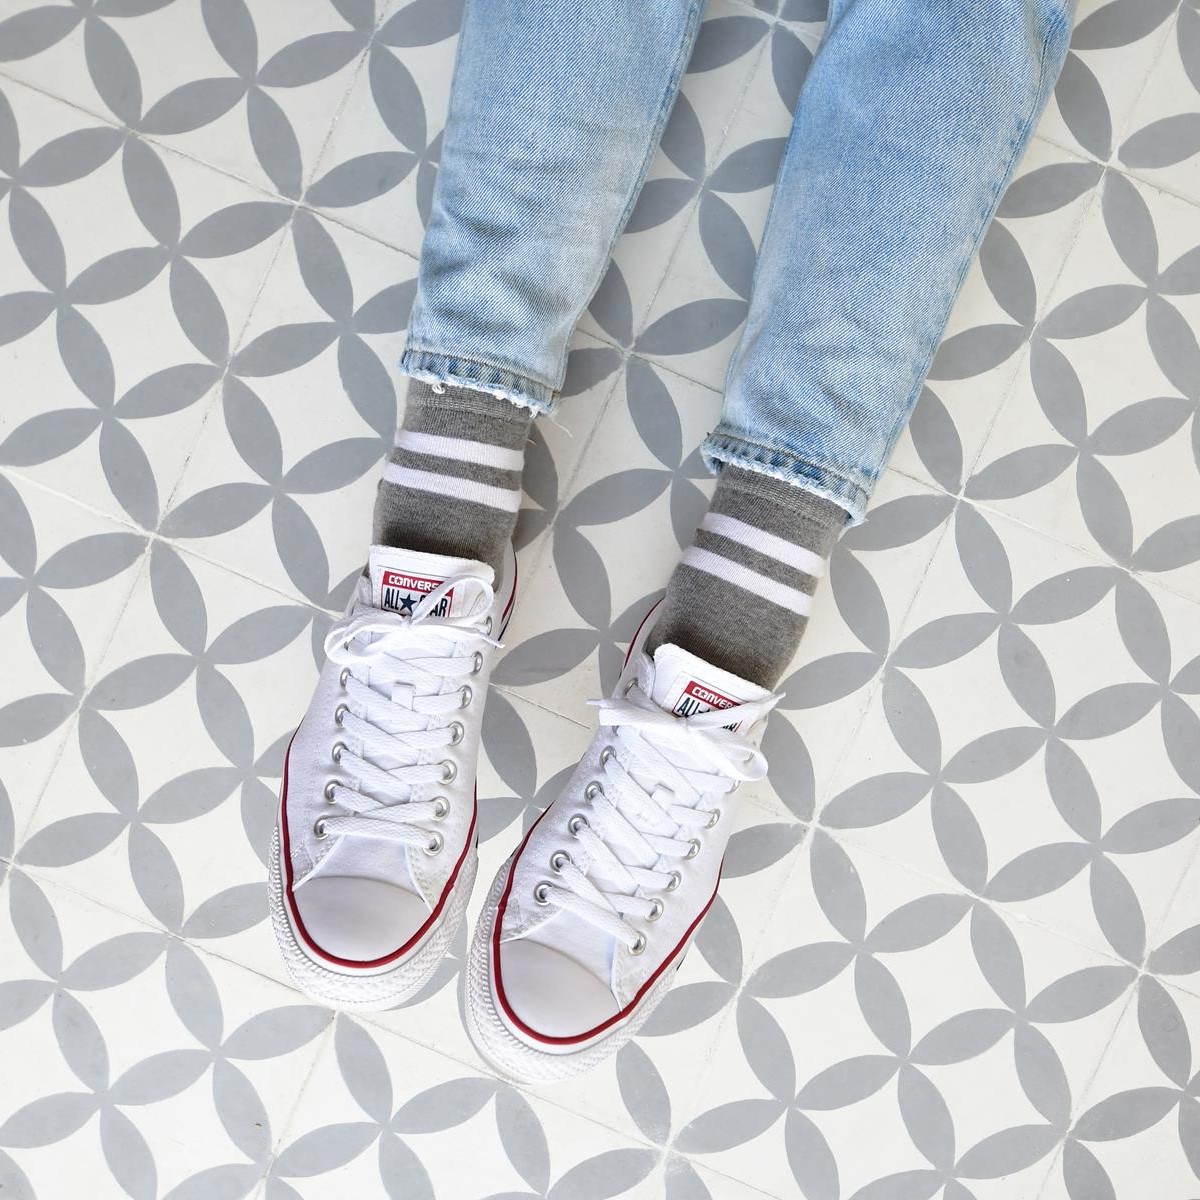 amorsocks-calcetines-socks-bajos-tobilleros-retro-rayas-gris-blanco-cuadrada